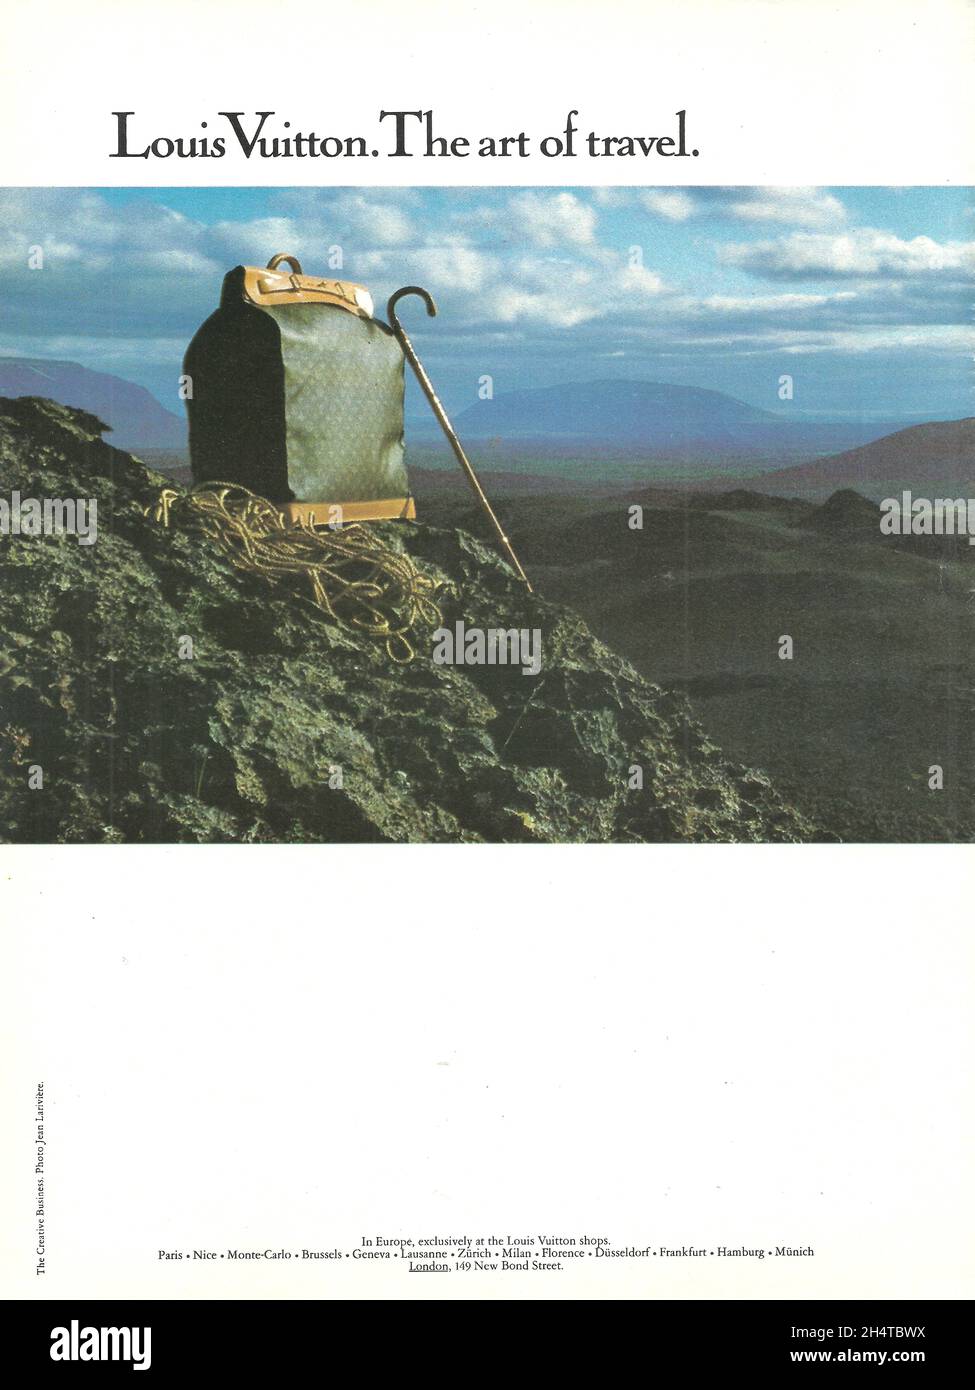 Louis Vuitton Luggage Magazine Print Ad The Art of Travel Bags 1980s VTG 2p  1983